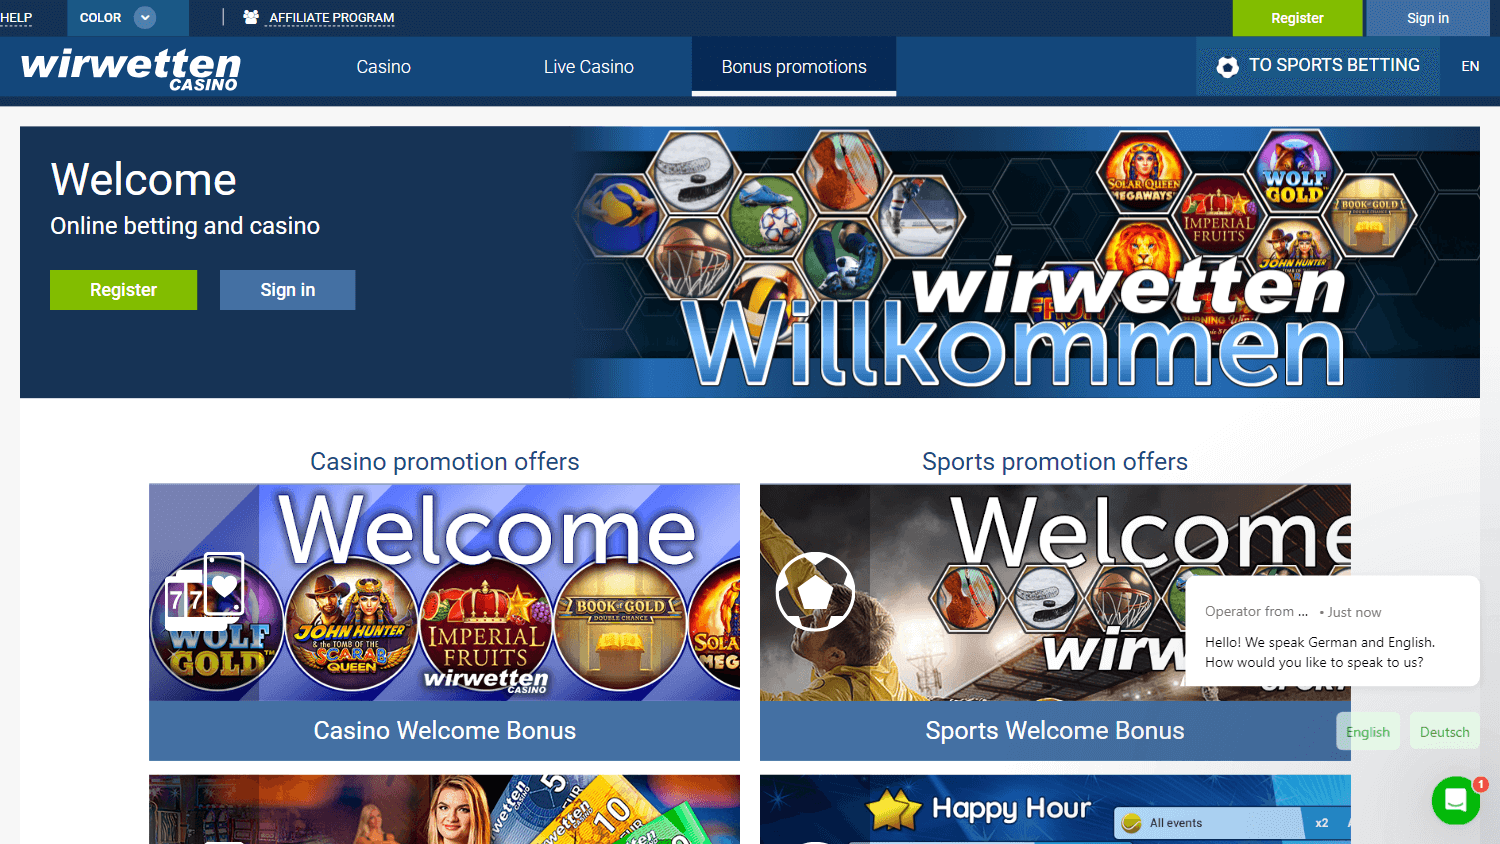 wir_wetten_casino_promotions_desktop